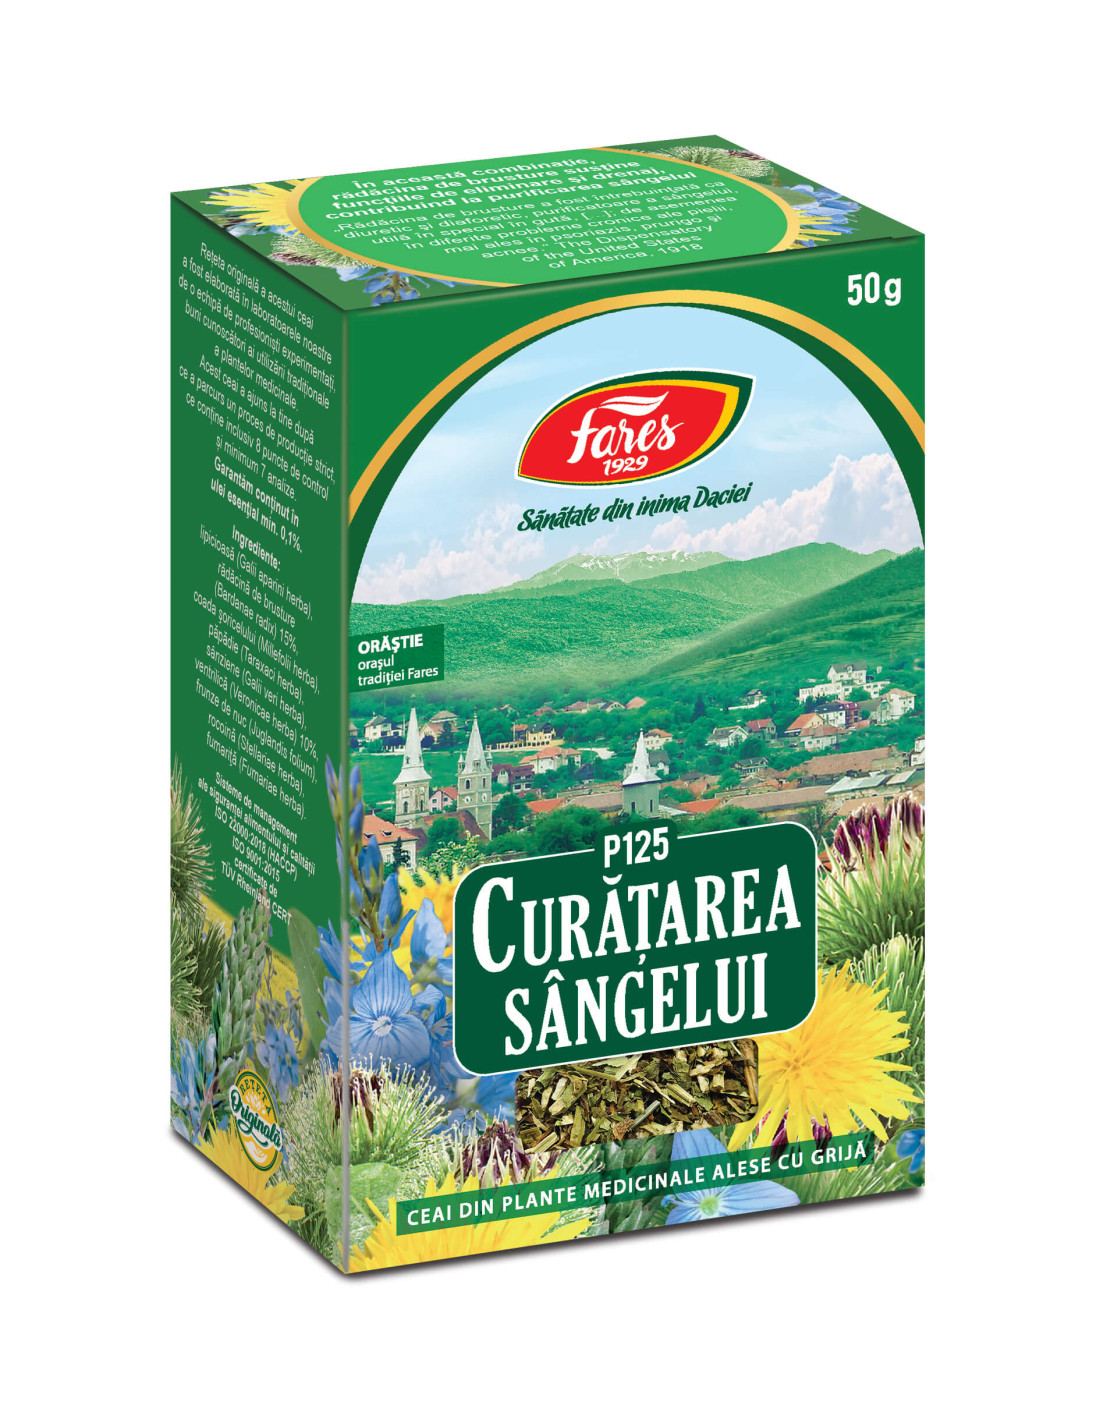 Ceaiuri - Ceai Curatare Sange, 50 g, Fares, farmacieieftina.ro